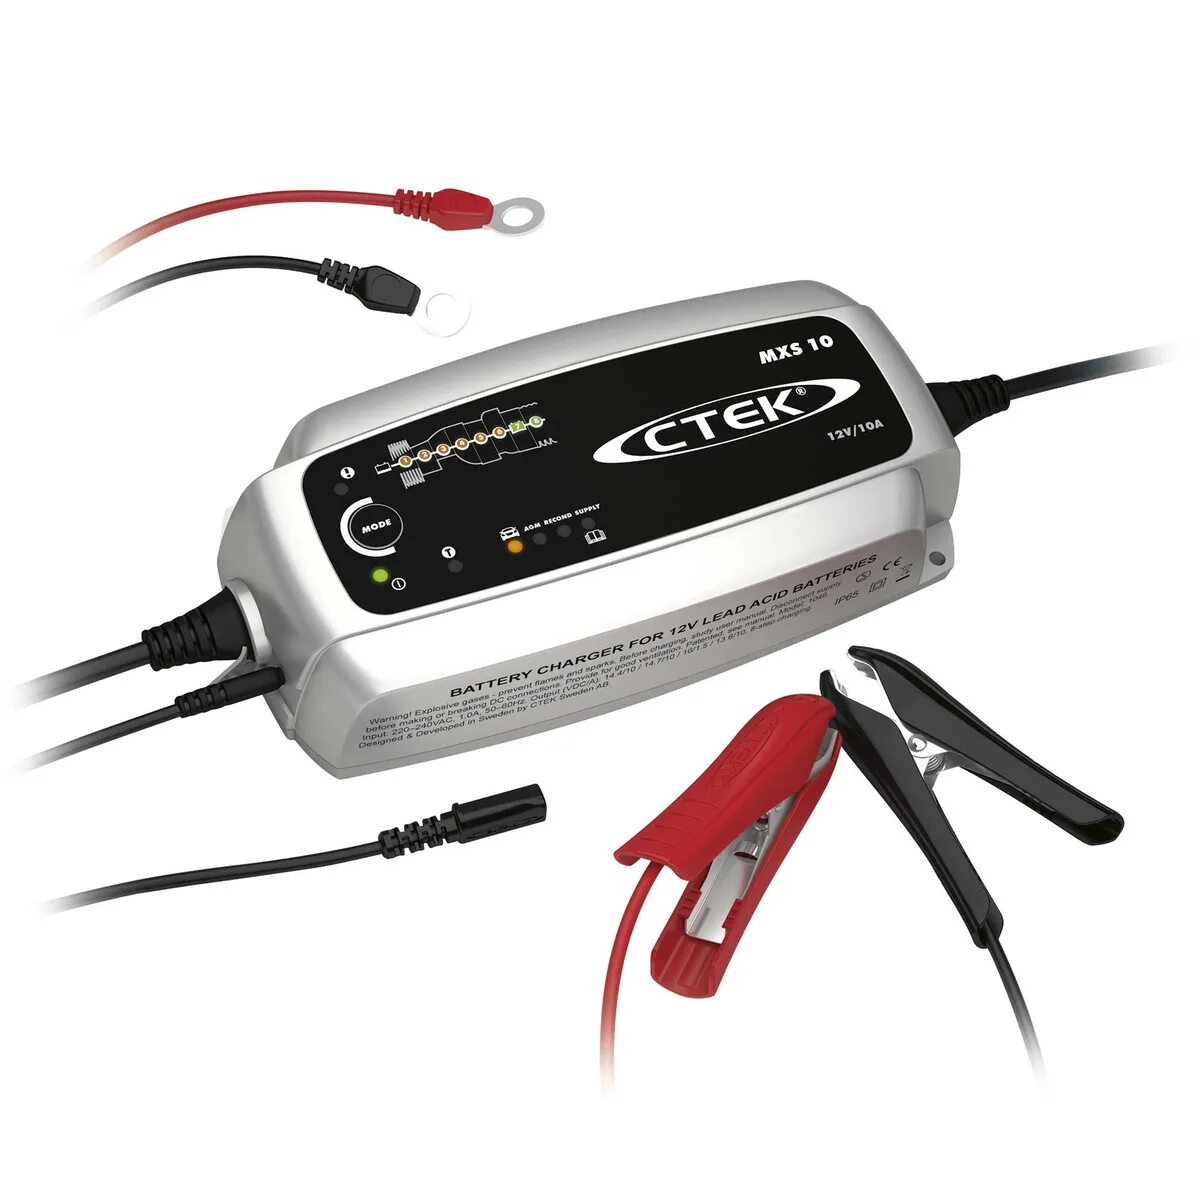 CTEK MXS 10. CTEK Battery Charger MXS 10. Зарядник для аккумулятора CTEK. CTEK MXS 10 токи заряда. Автономное зарядное устройство